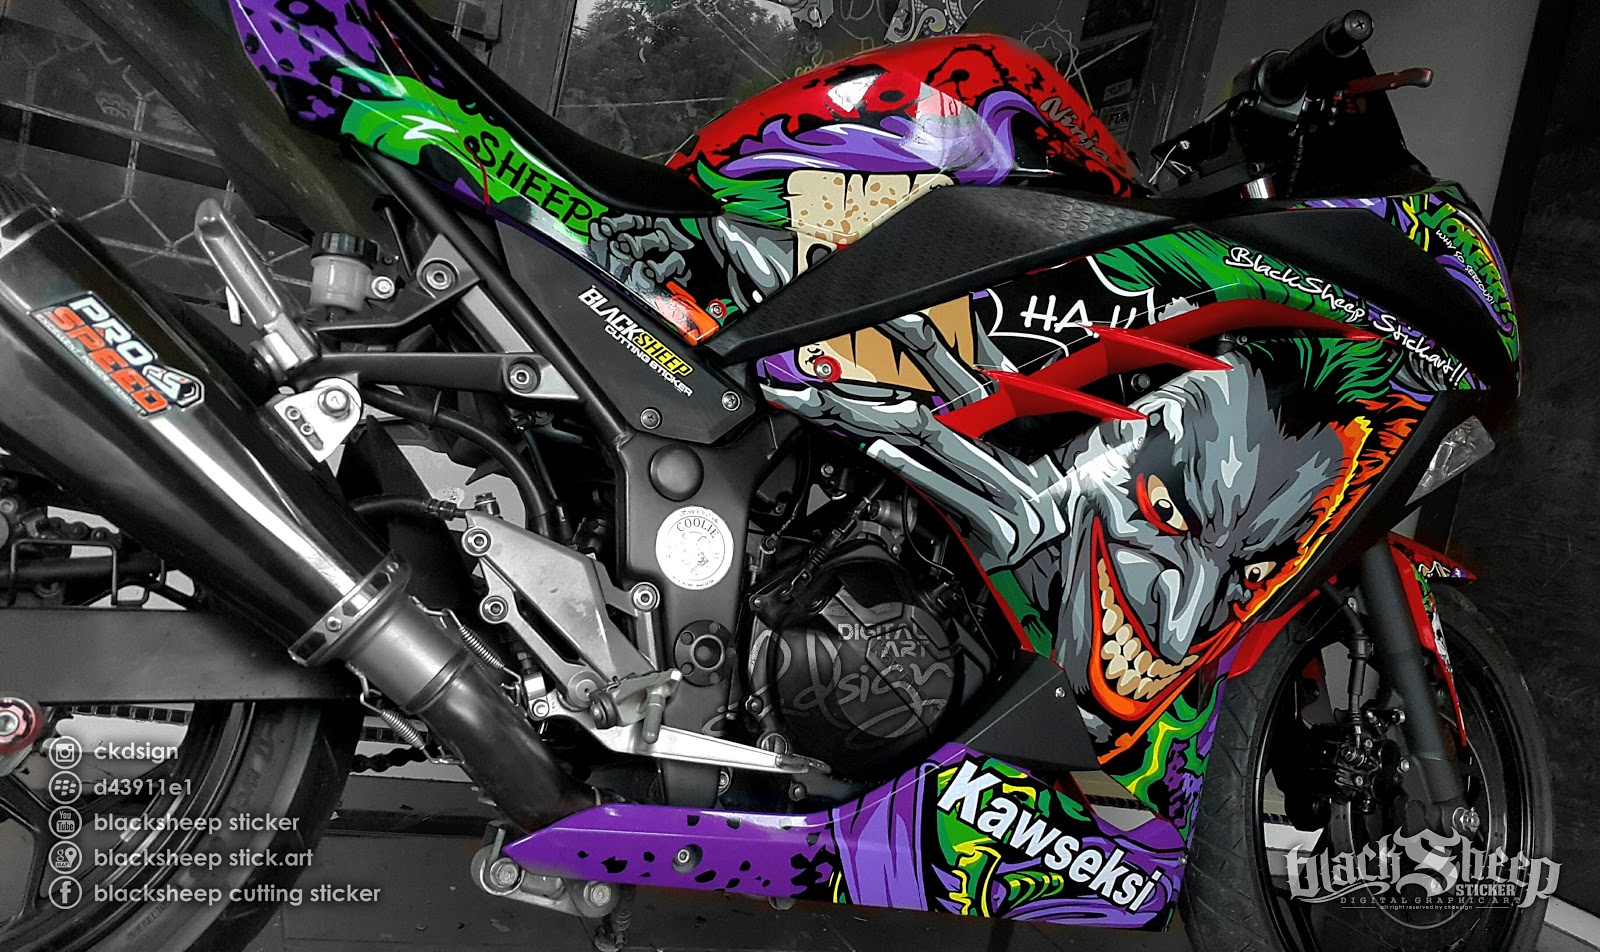 Kawasaki Ninja Joker cutting sticker BlackSheep sticker